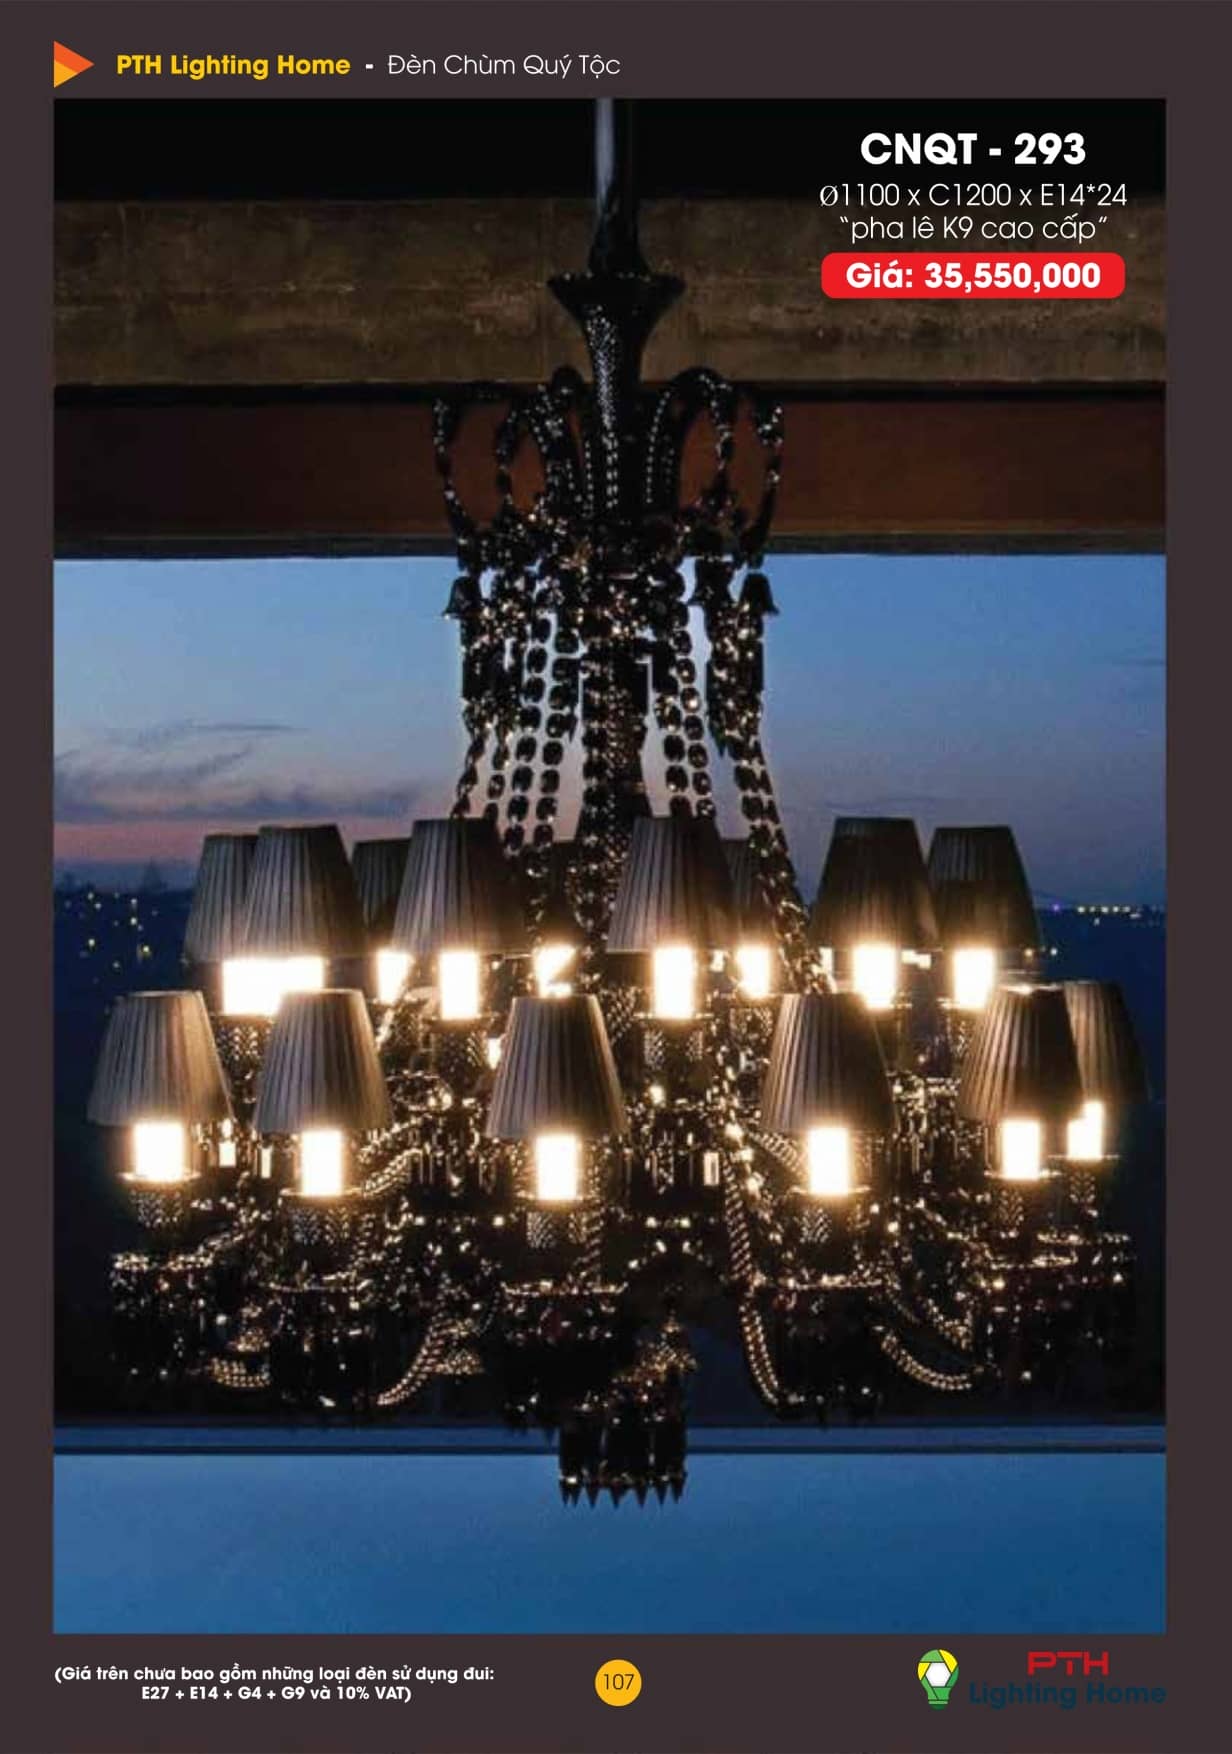 catalogue-bang-gia-den-led-trang-tri-pth-lighting-home-109